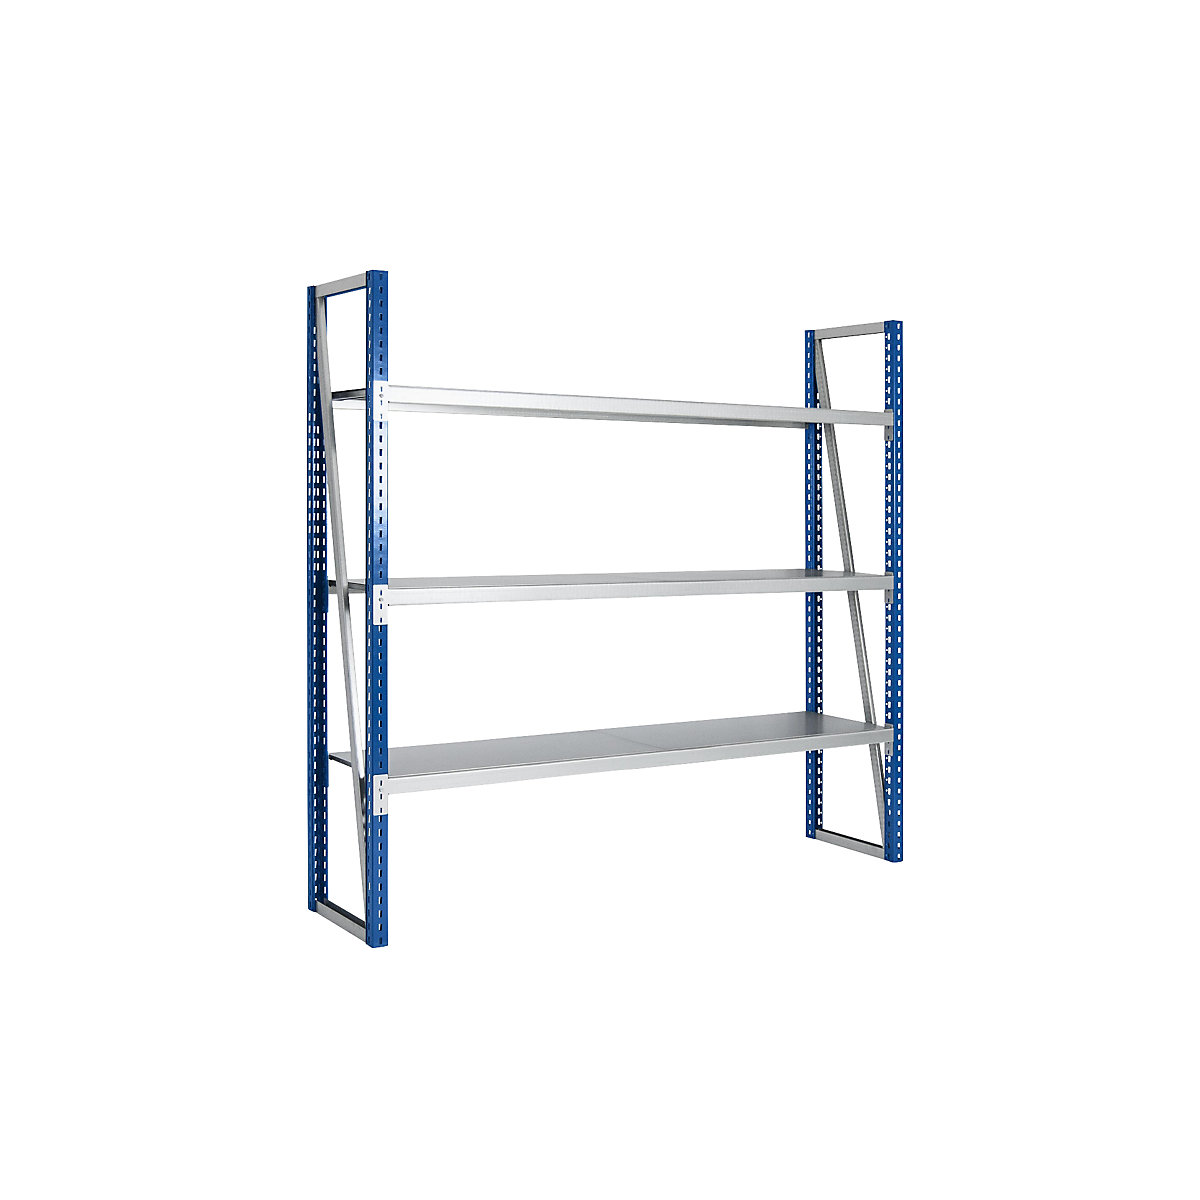 Wide span shelving, coloured – eurokraft pro, HxD 1990 x 500 mm, standard shelf unit, gentian blue RAL 5010